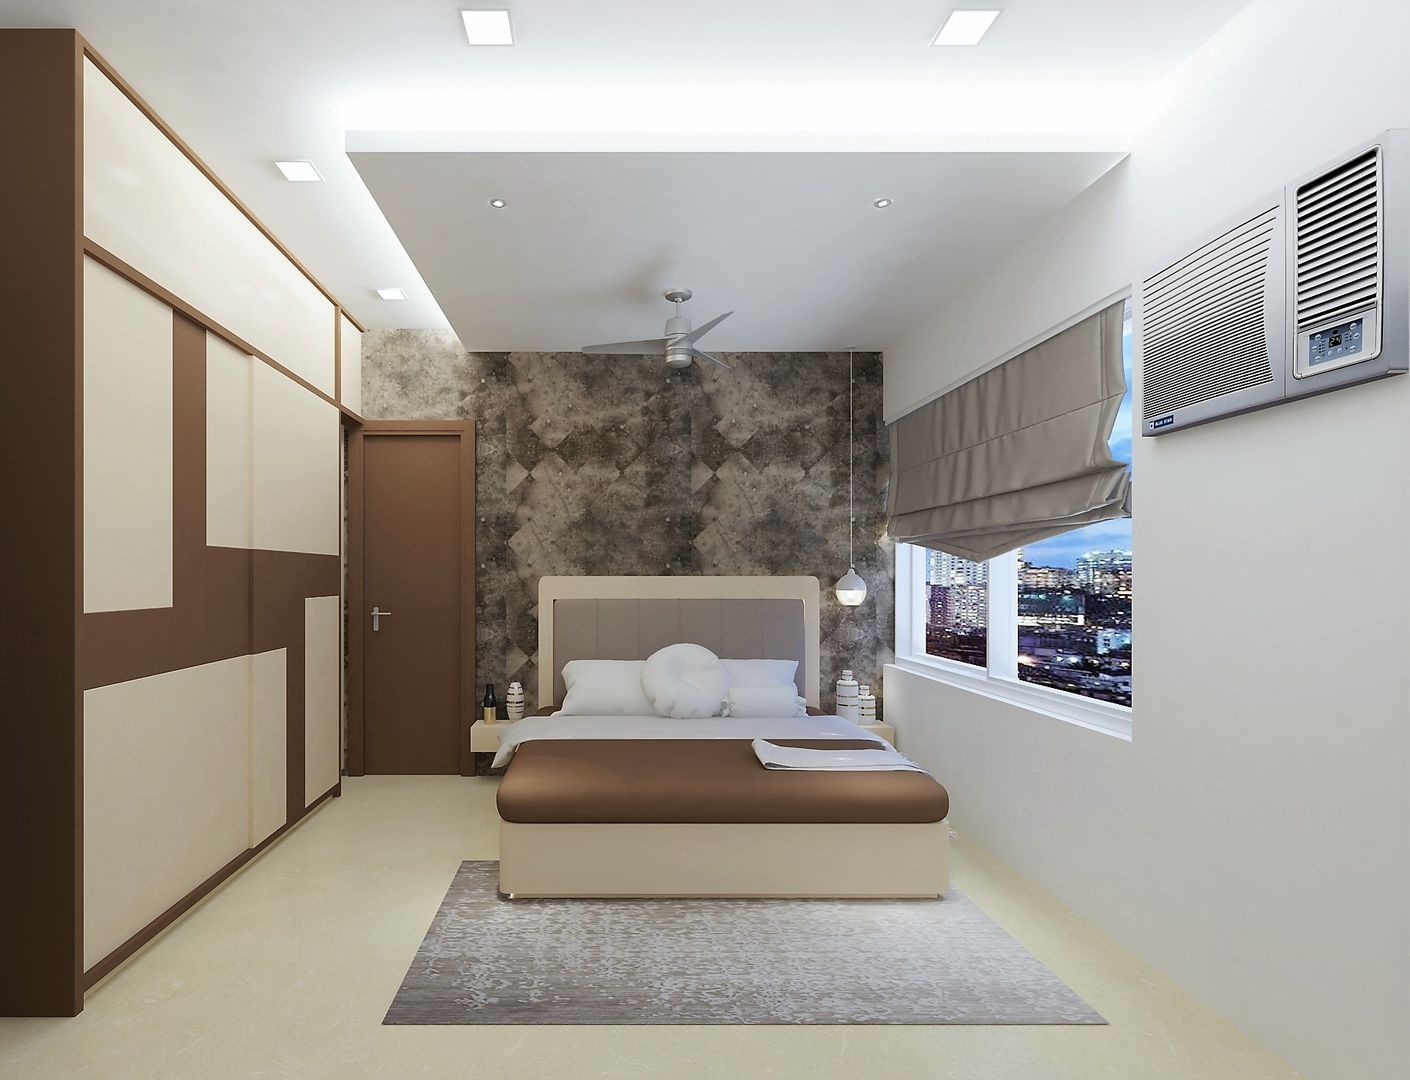 Bedroom Design Ideas, Golden Spiral Productionz (p) ltd Golden Spiral Productionz (p) ltd 모던스타일 침실